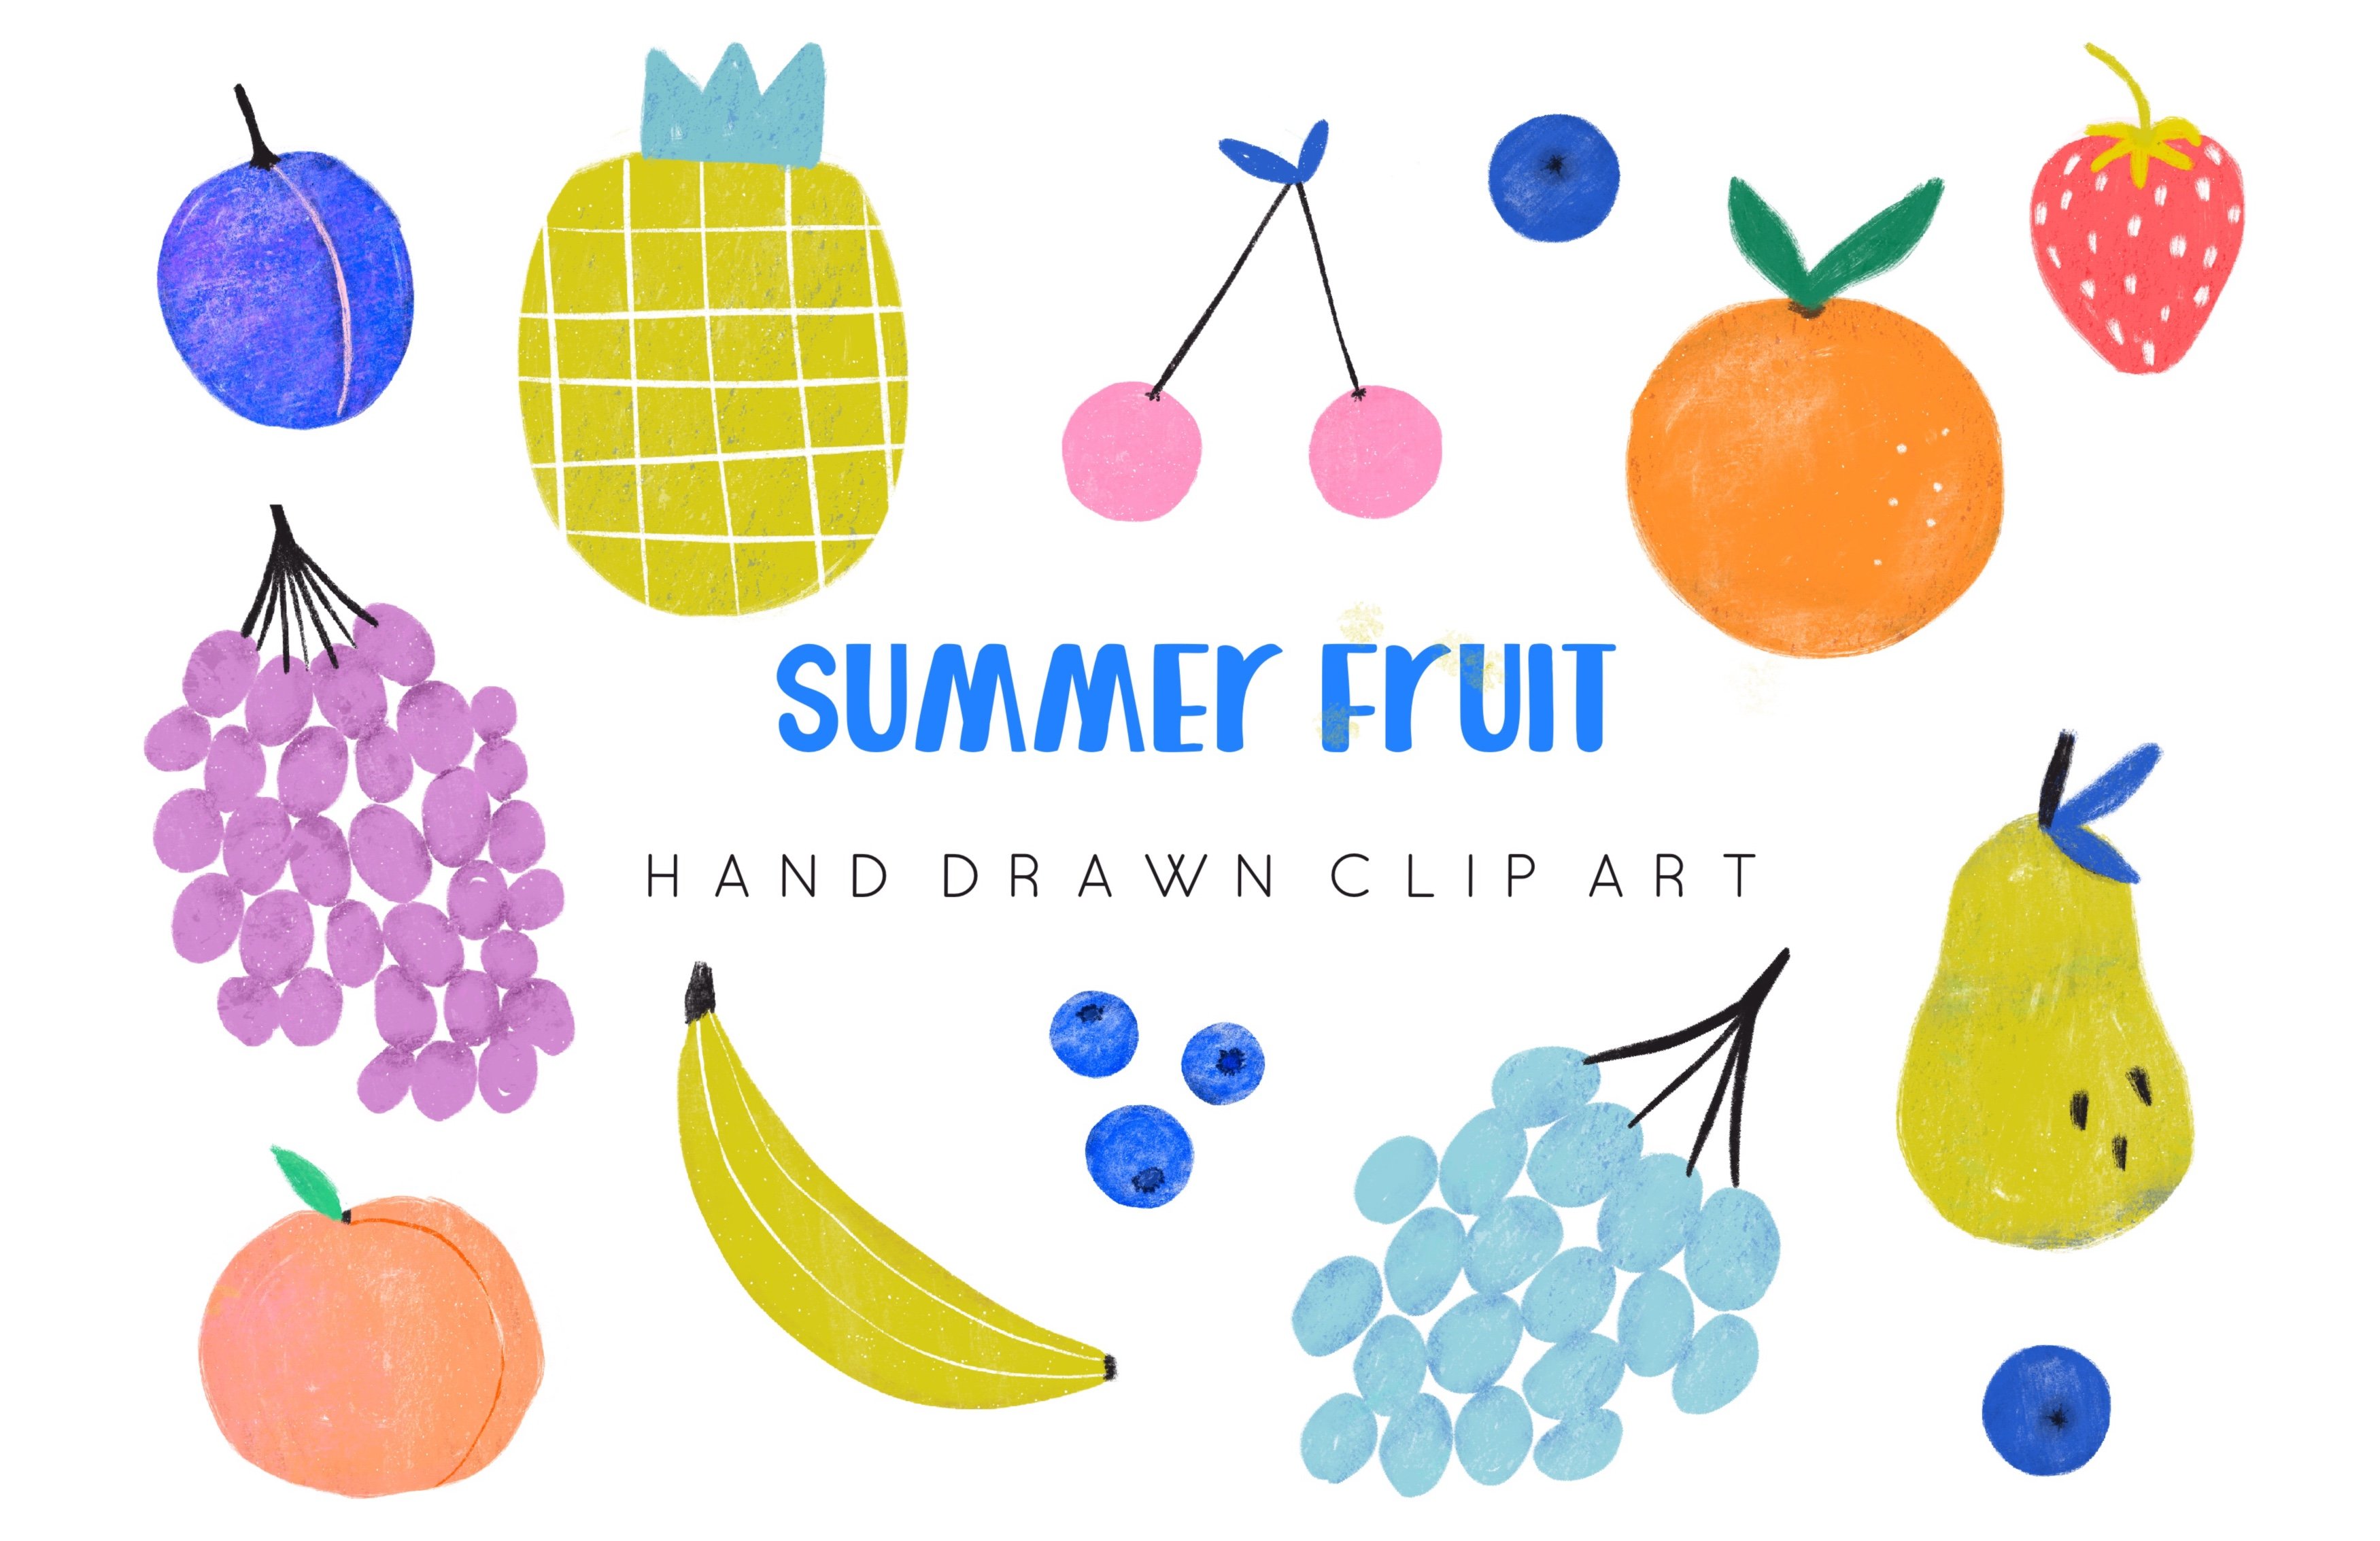 Fruit clipart, handdrawn modern cover image.